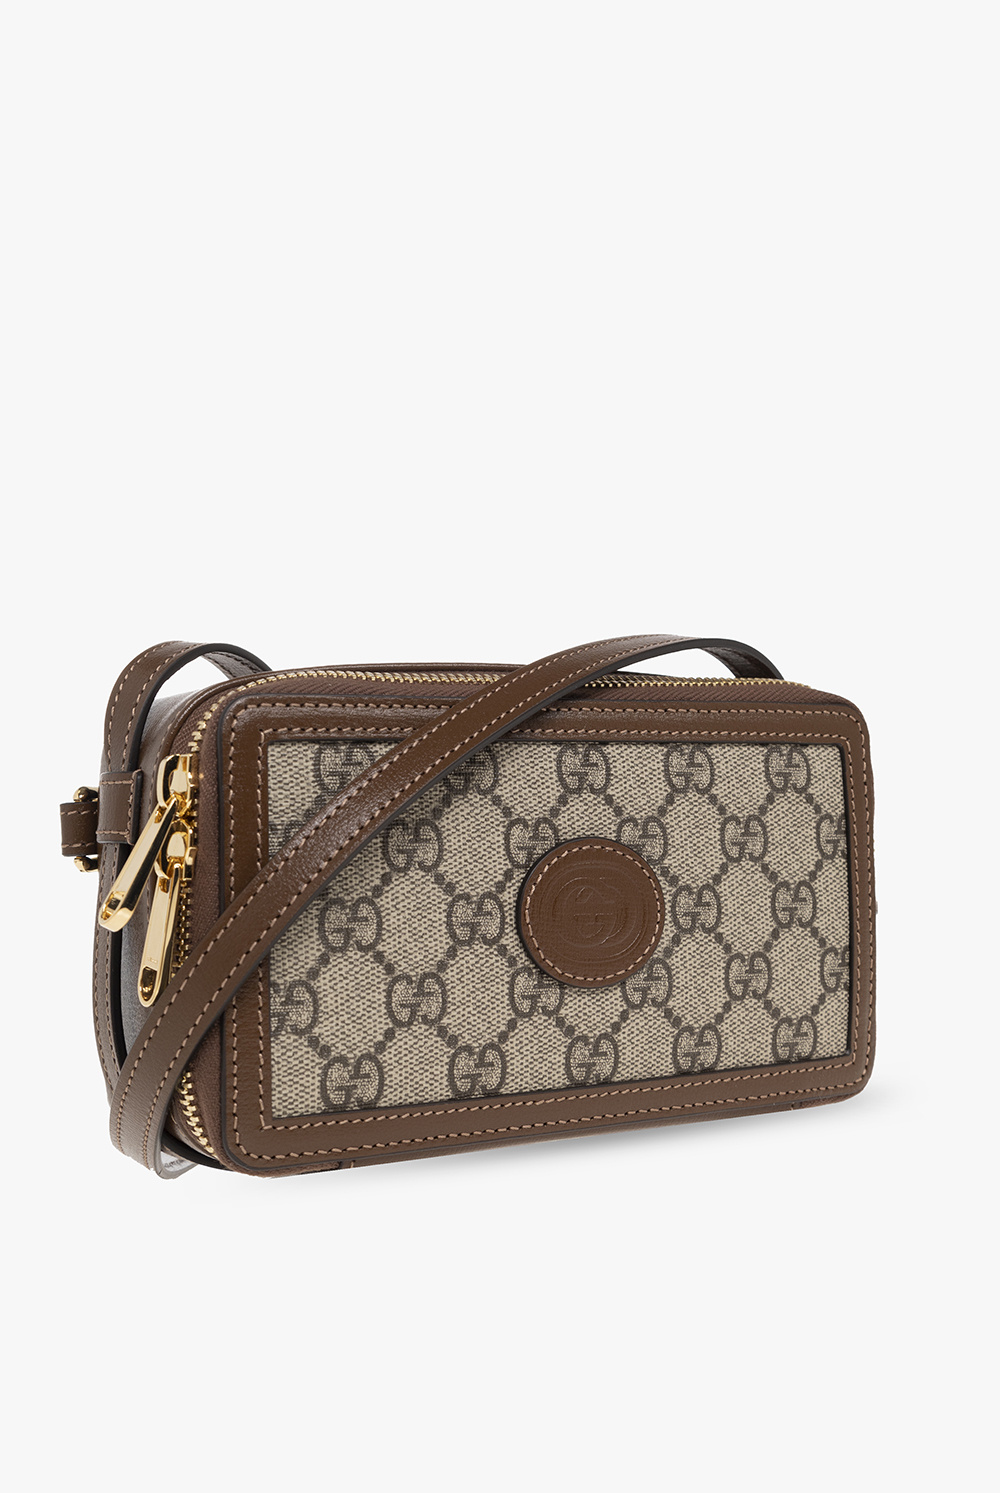 Gucci Interlocking G Mini Bag